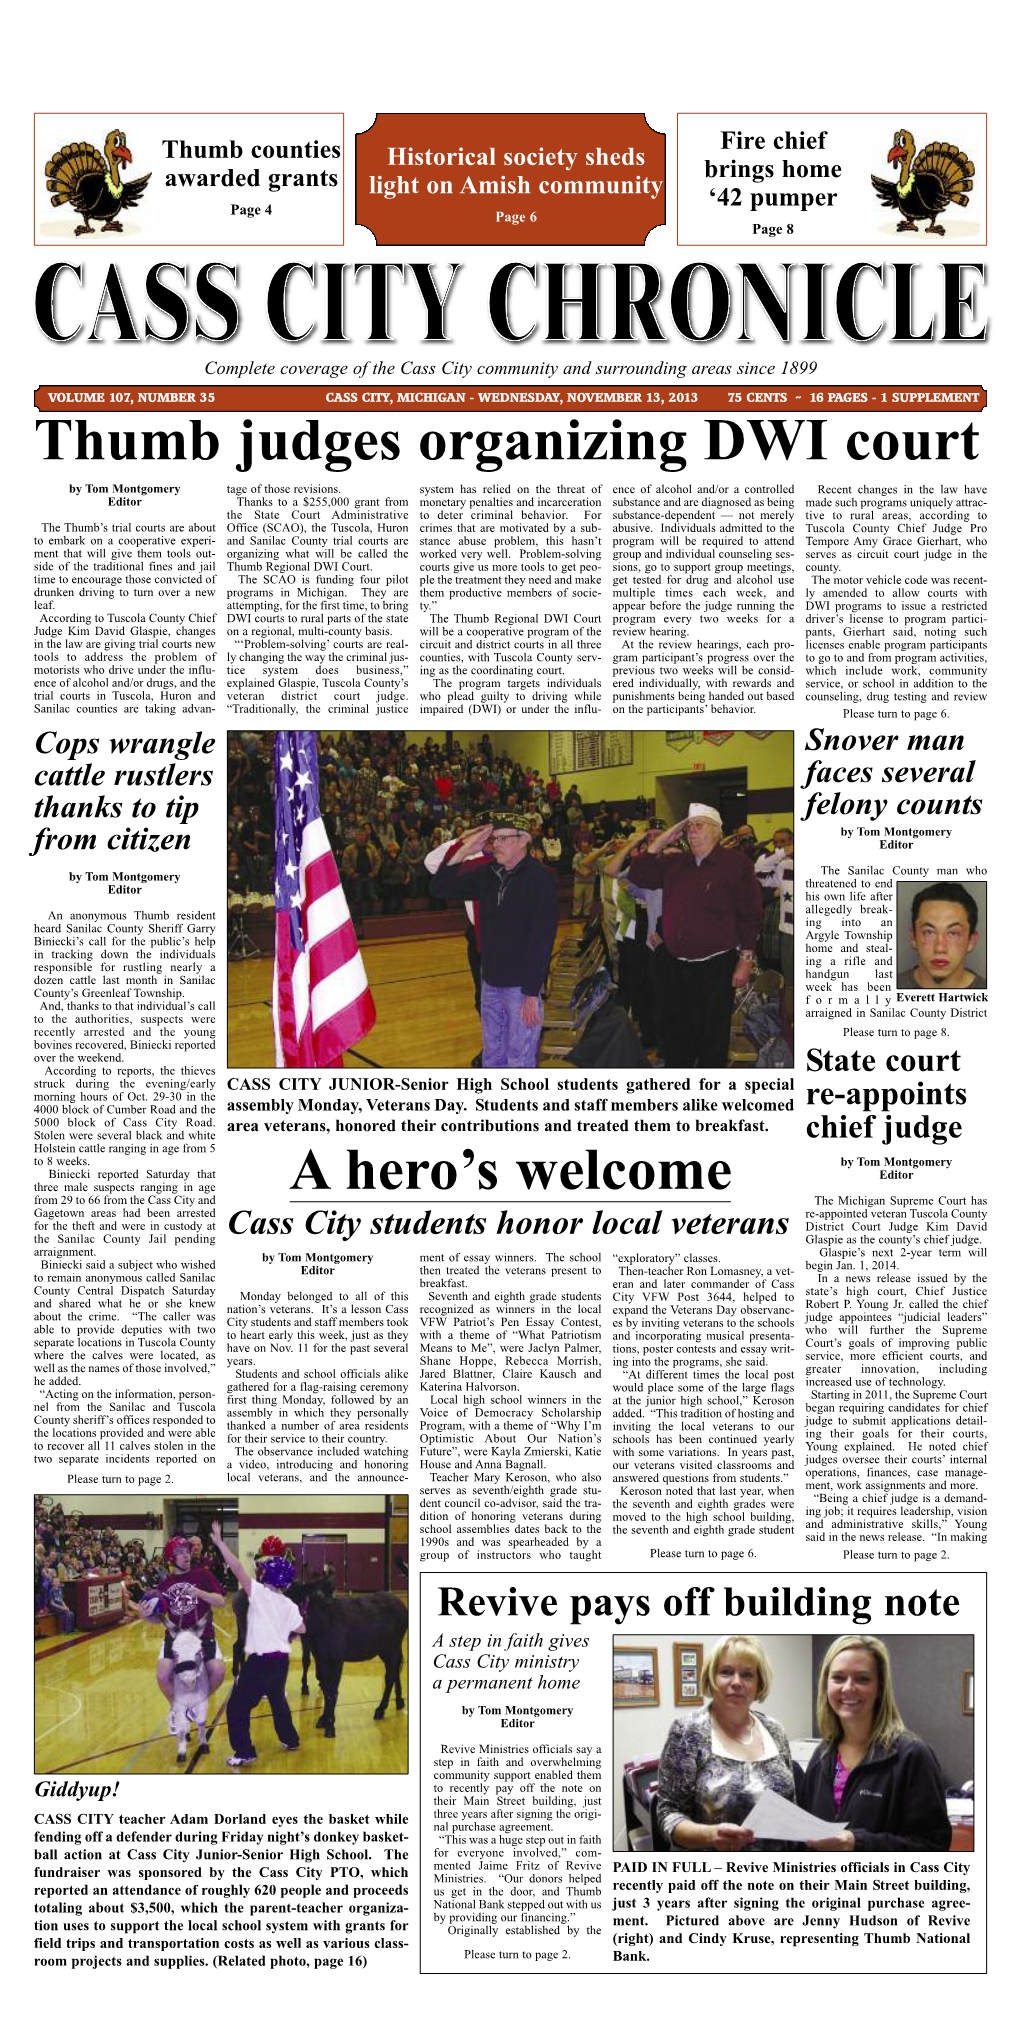 Cass City Chronicle 11-13-13